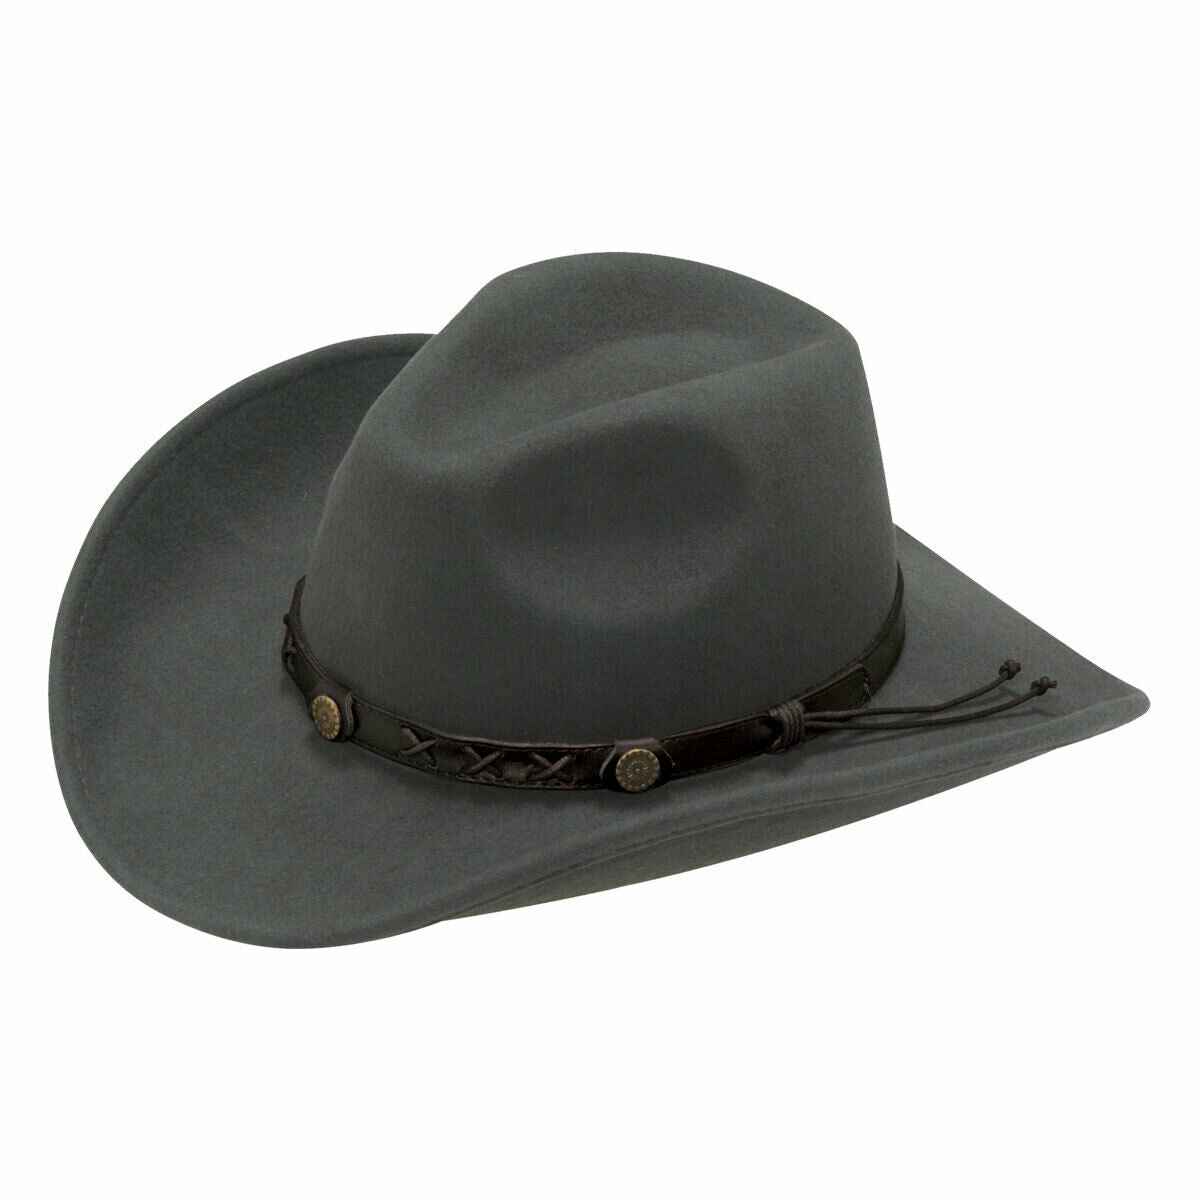 Twister Dakota Crushable Wool Felt Hat in Graphite